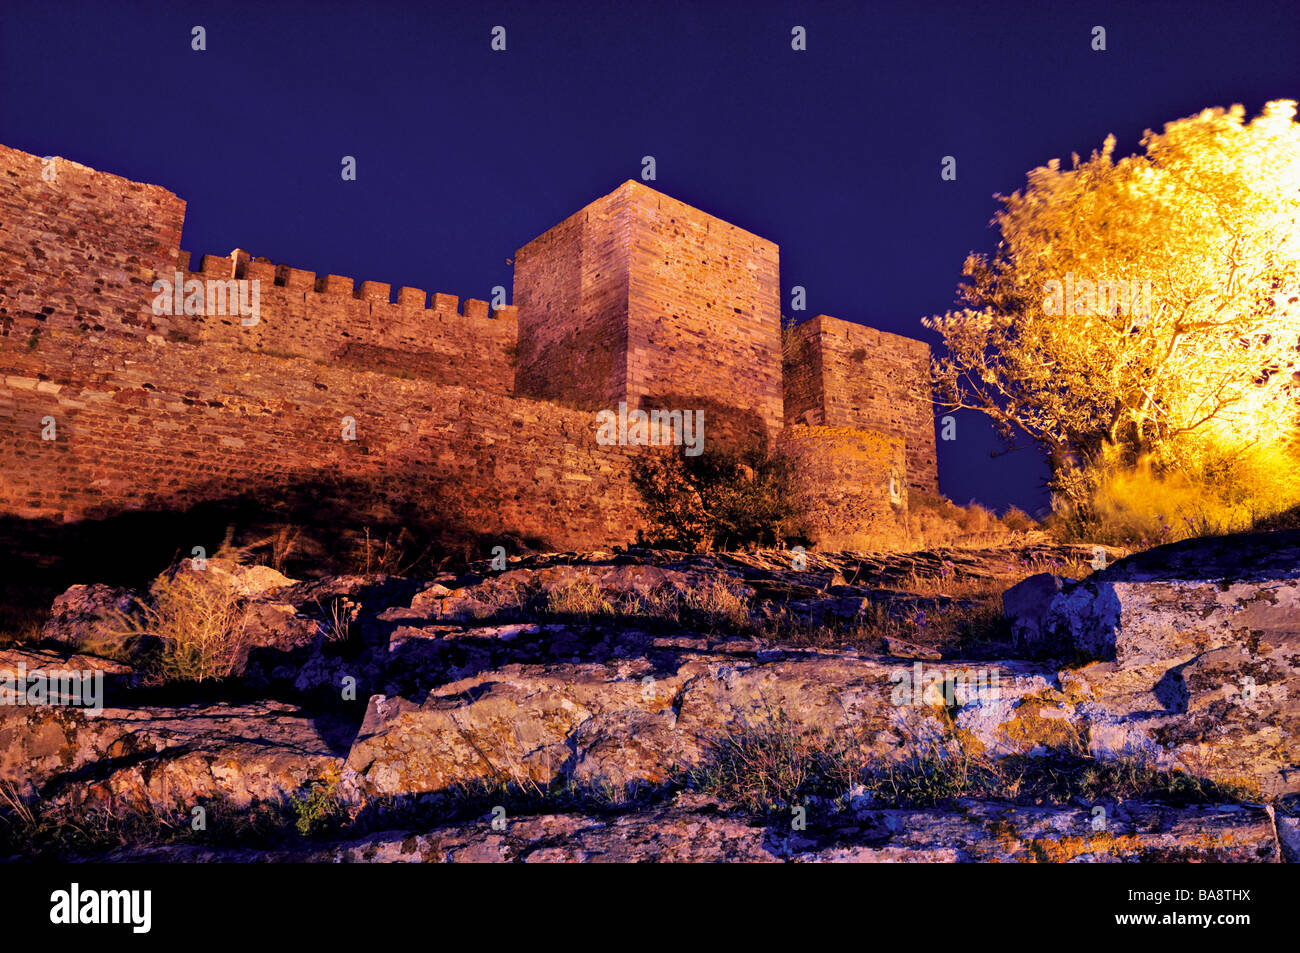 Portugal, Alentejo: Nocturnal iluminated castle of the historical village Monsaraz Stock Photo